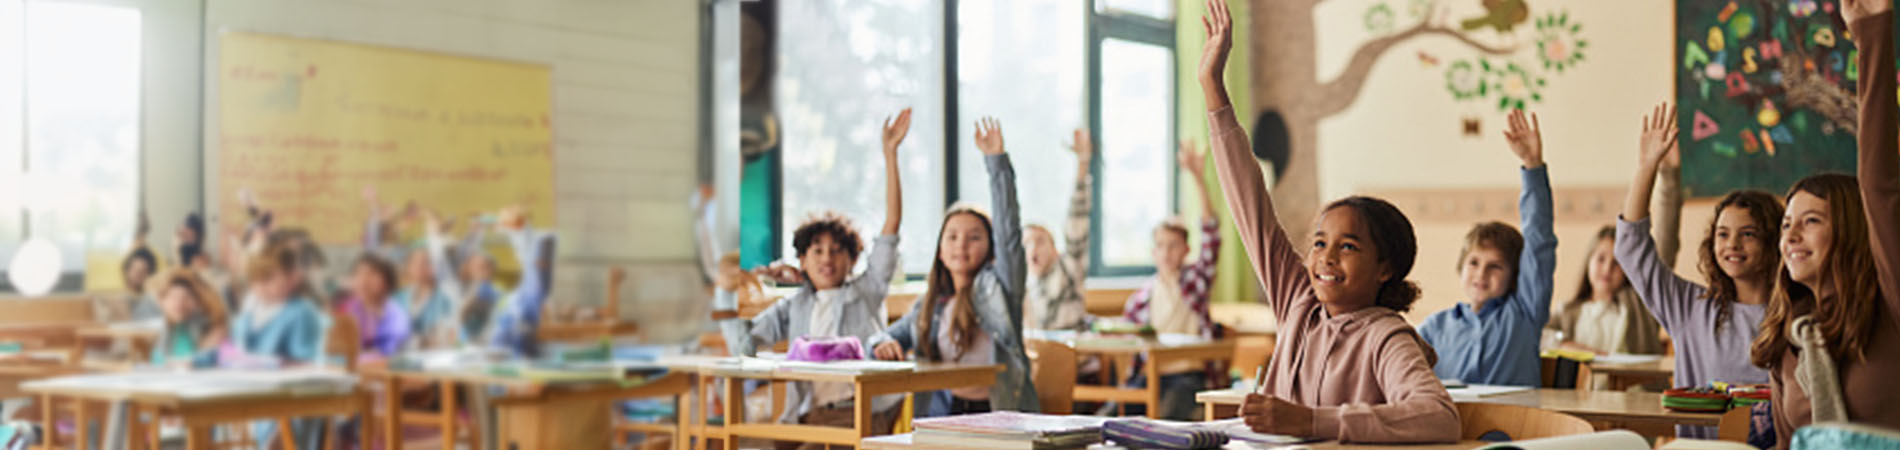 Children raising hand in classroom